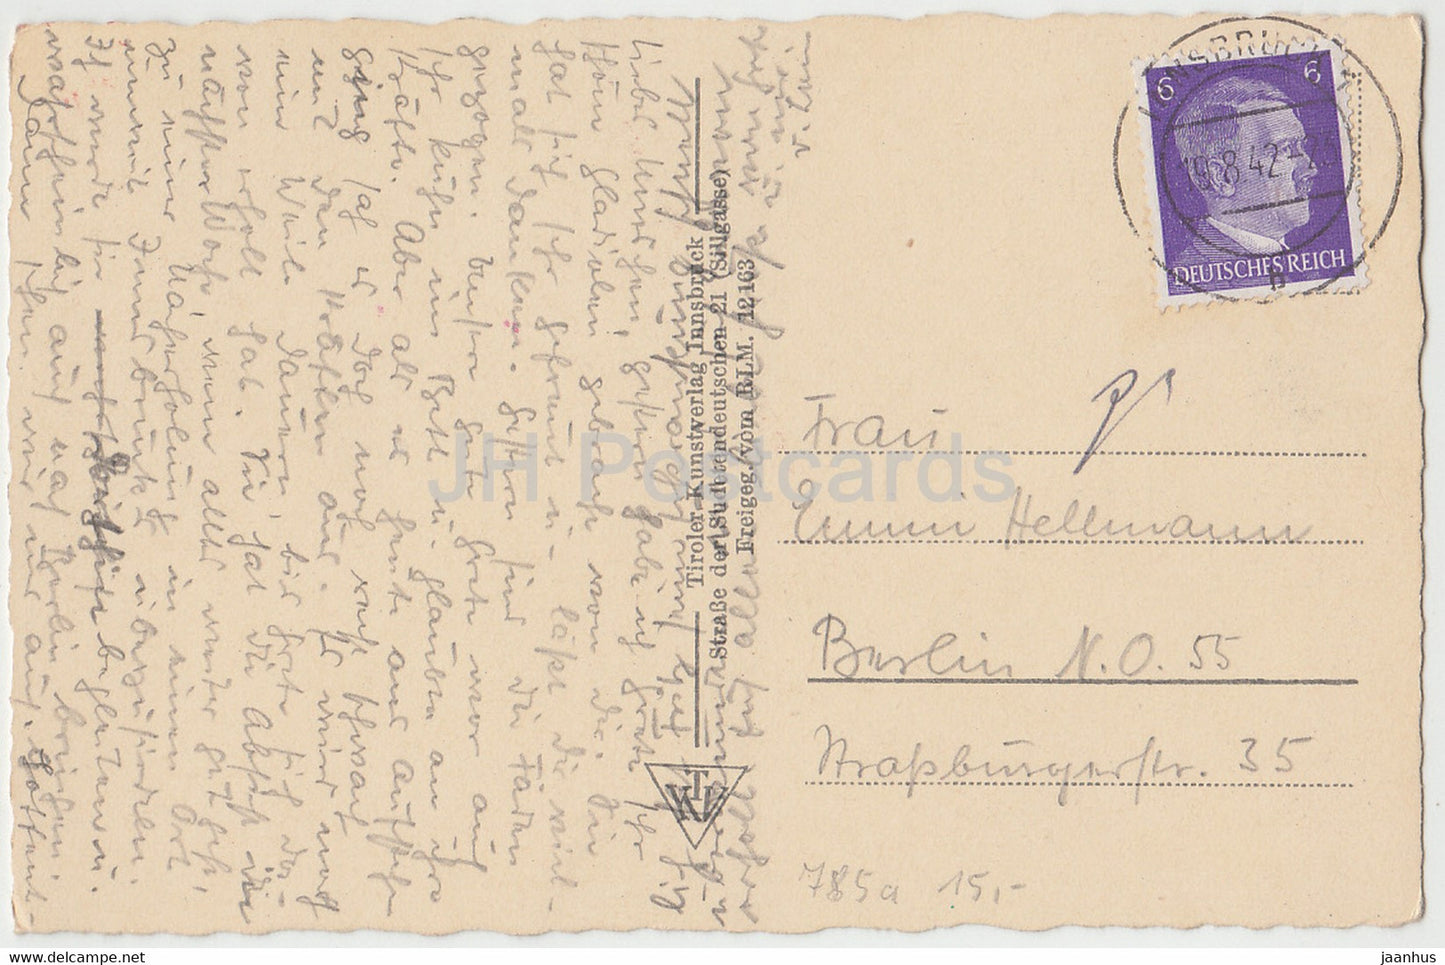 Innsbruck - Maria Theresienstrasse m Annasaule - carte postale ancienne - 1942 - Autriche - utilisé